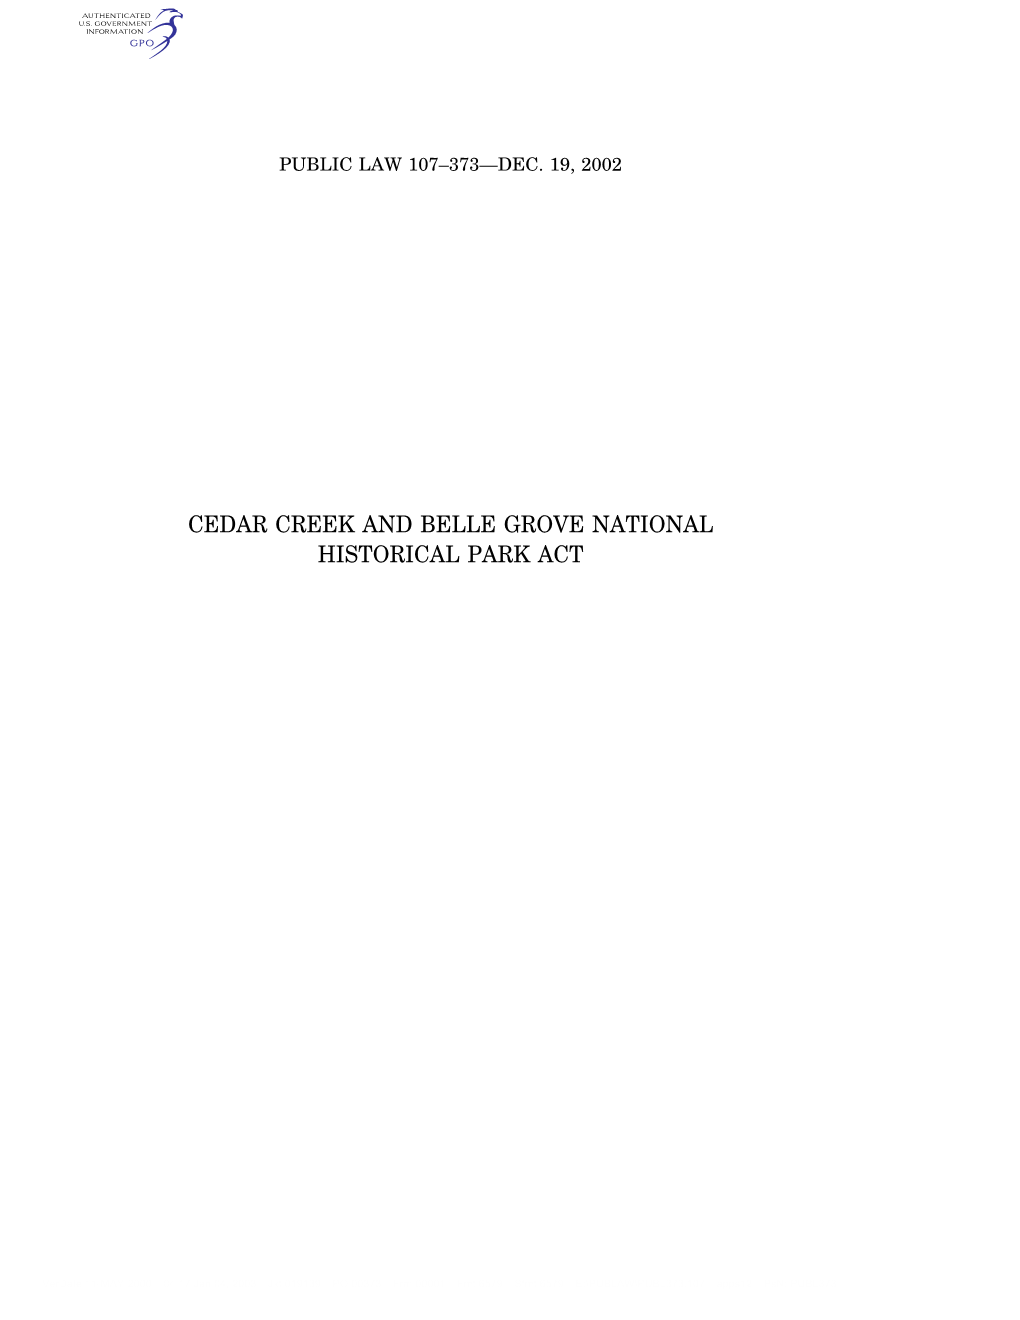 Cedar Creek and Belle Grove National Historical Park Act